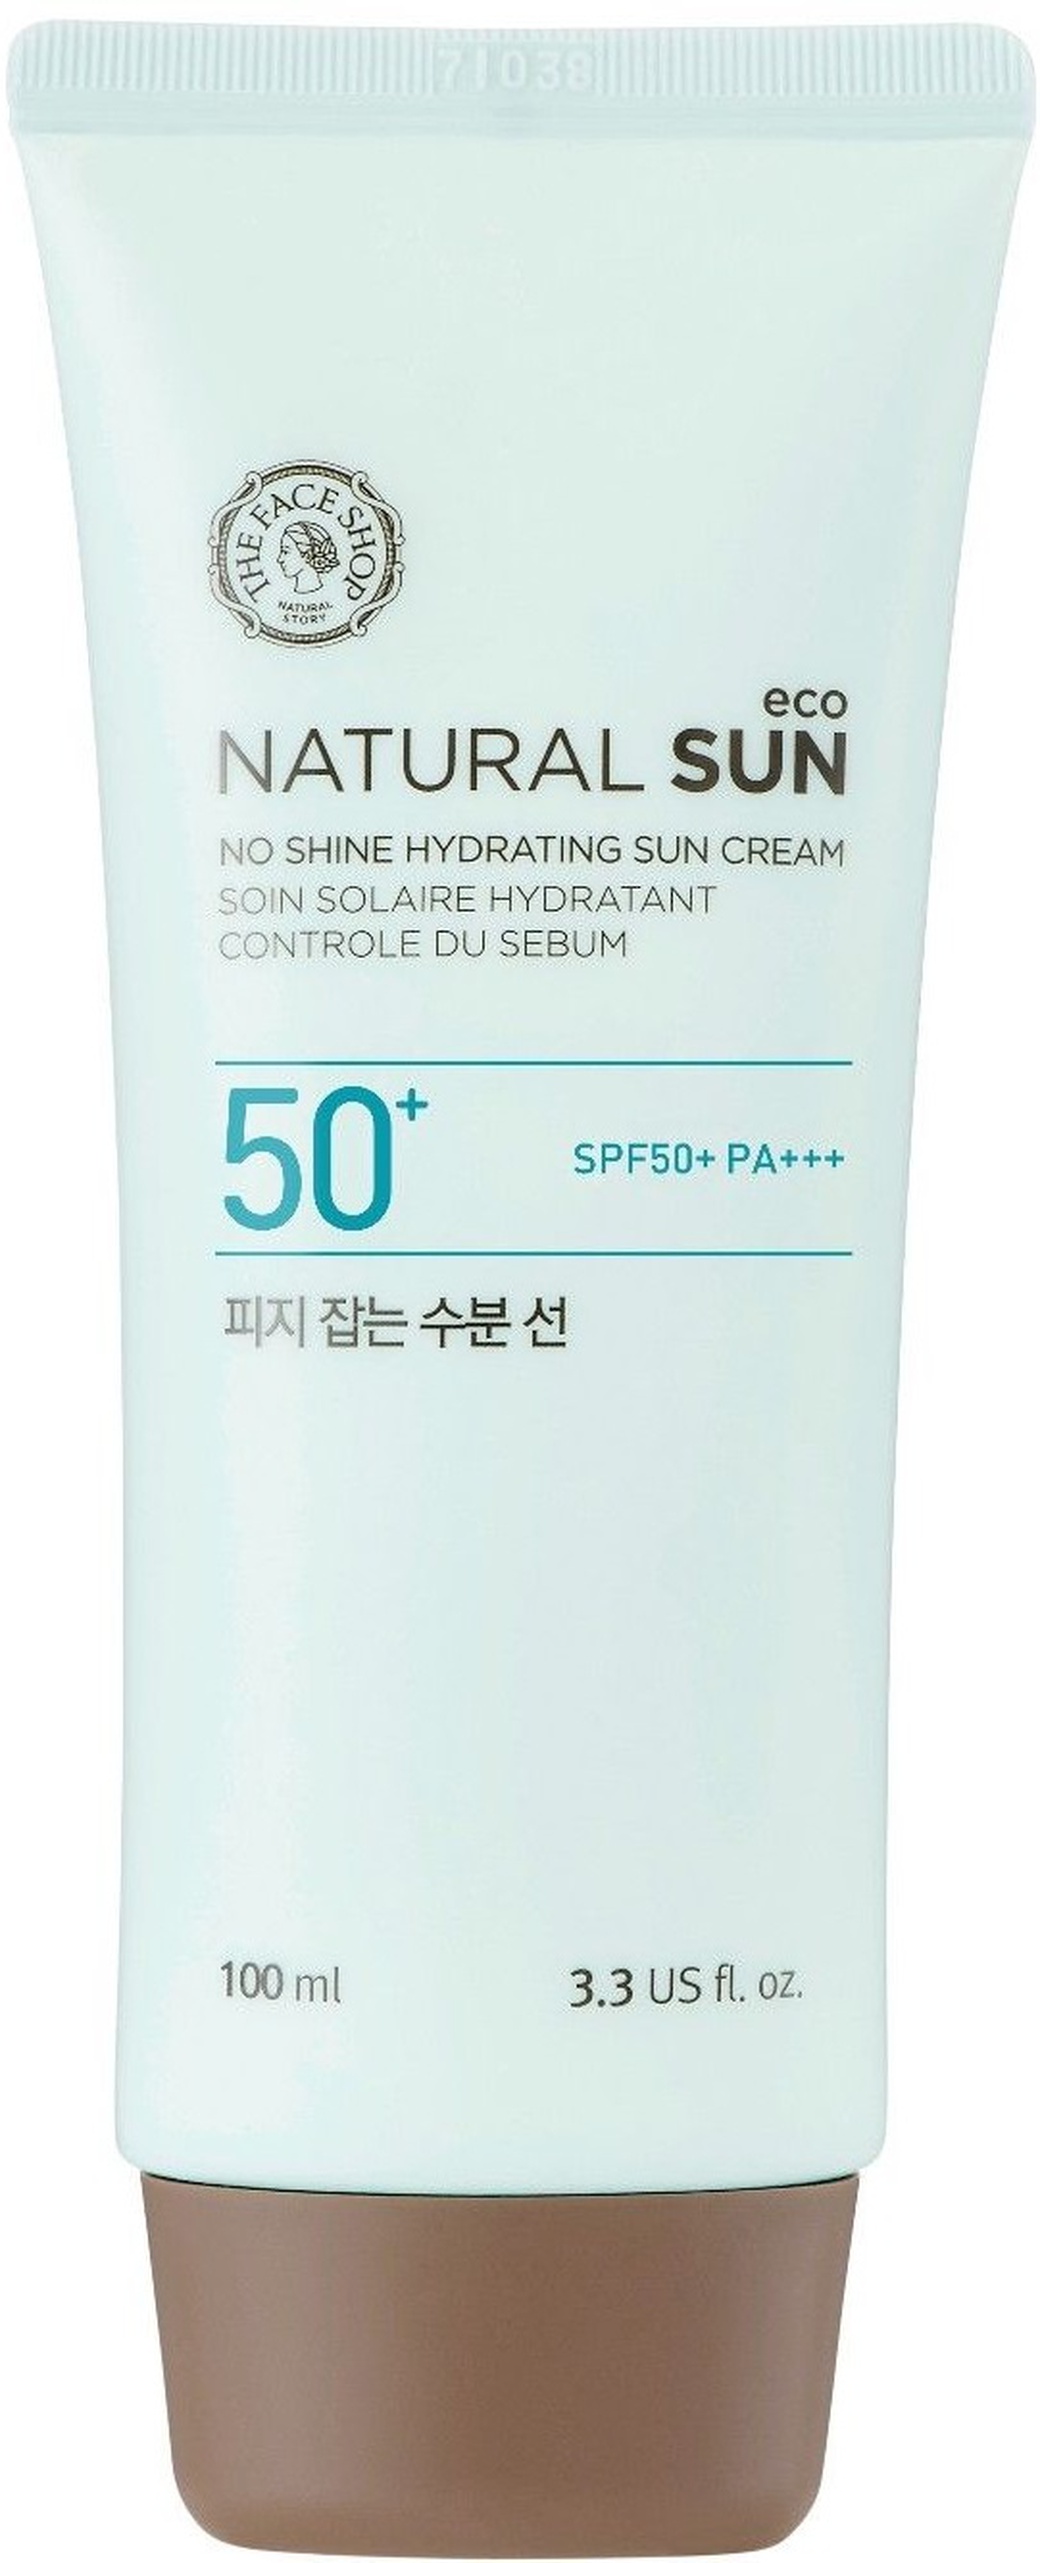 The Face Shop Матирующий солнцезащитный крем Natural Sun Eco No Shine Hydrating Sun Cream SPF50/PA+++ фото